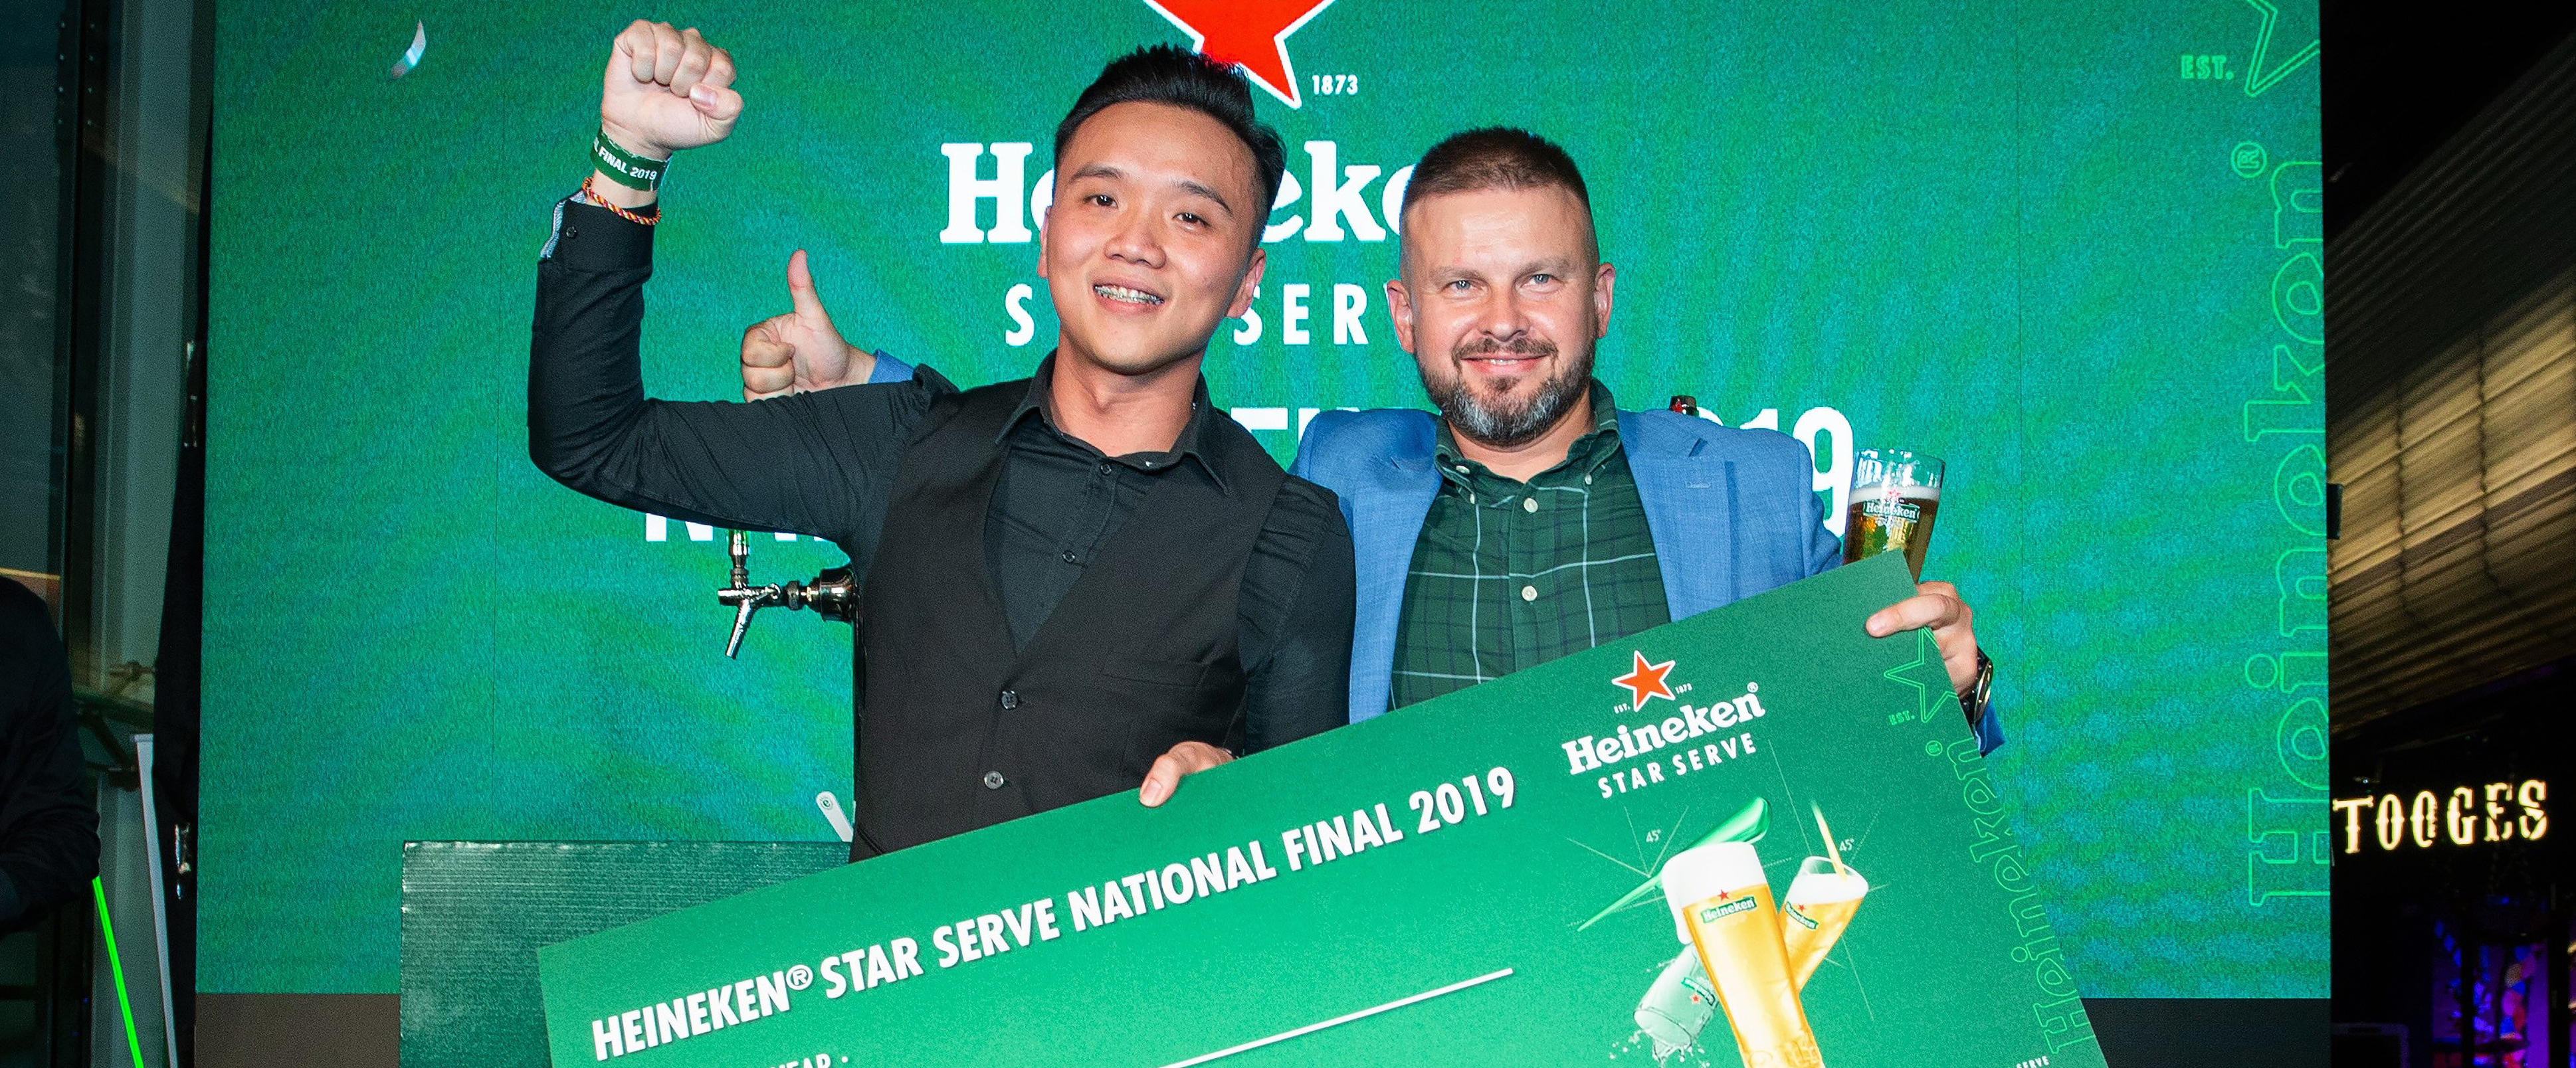 Heineken Star Serve National Final 2019_01-v3